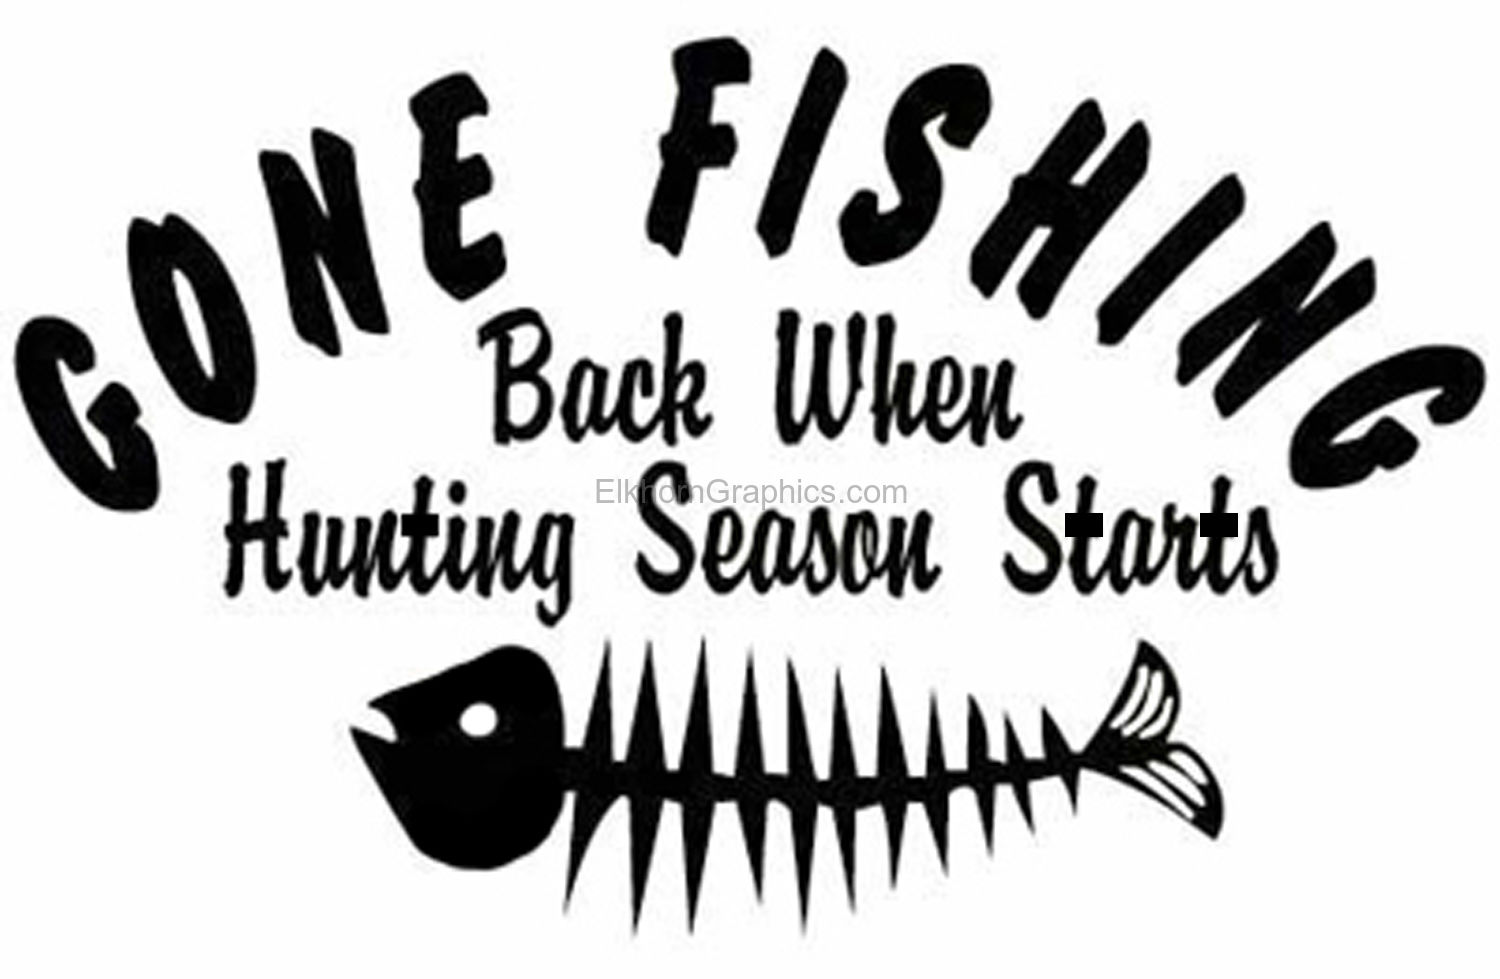 Gone Fishing Back for Hunting Season Sticker - Fishing Stickers